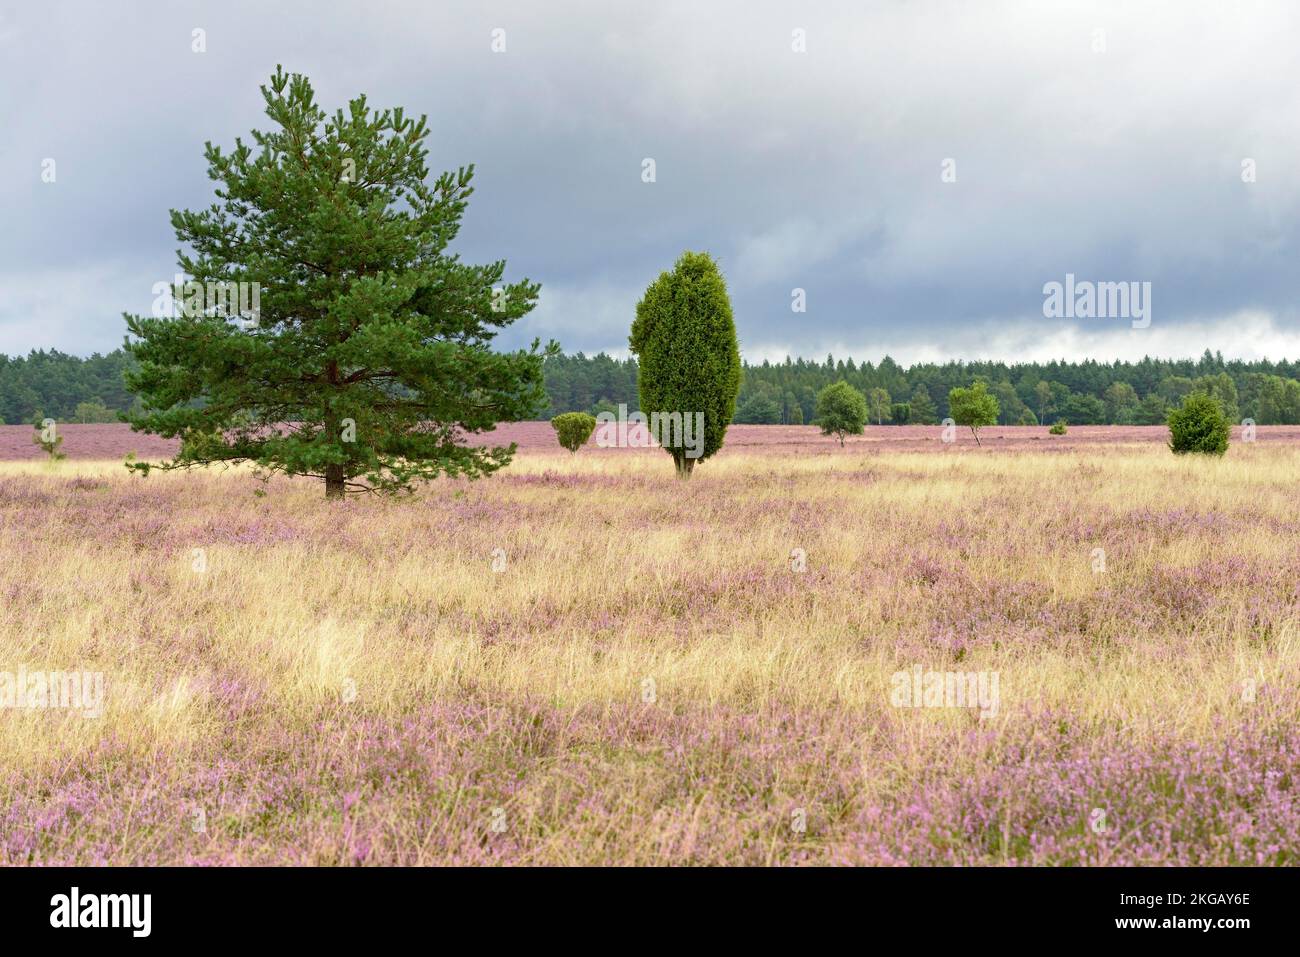 Heathland, Oberoher Heide, common juniper (Juniperus communis), pine (Pinus) and flowering common heather (Calluna Vulgaris), approaching rain front, Stock Photo